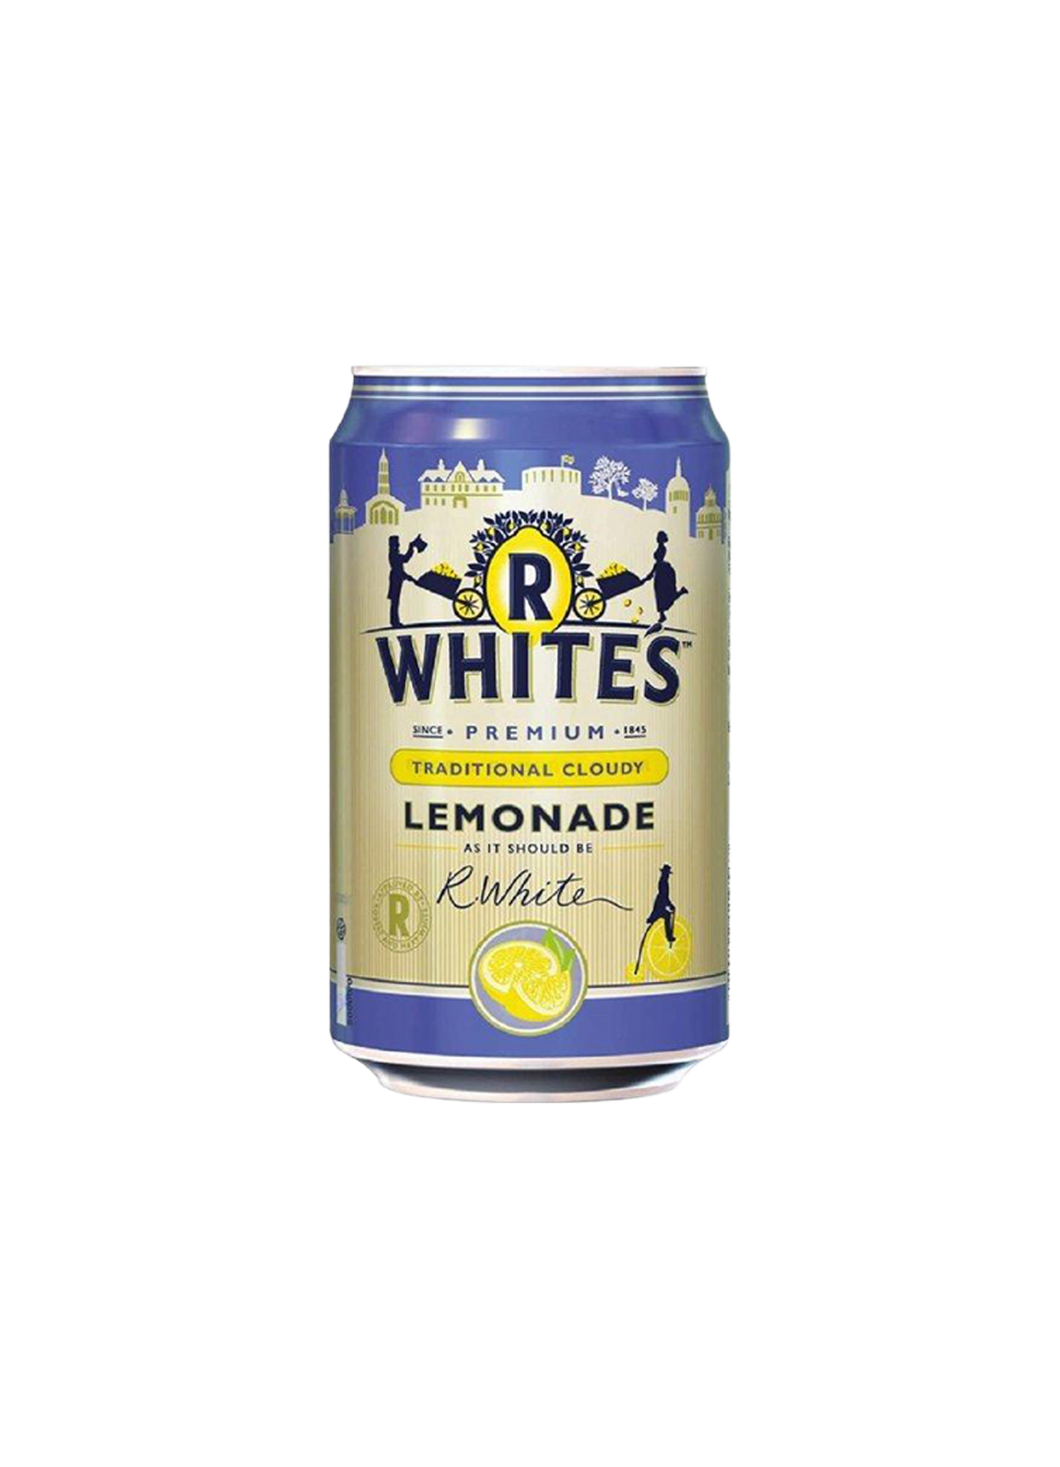 RWhites Premium Traditional Cloudy Lemonade 330ml